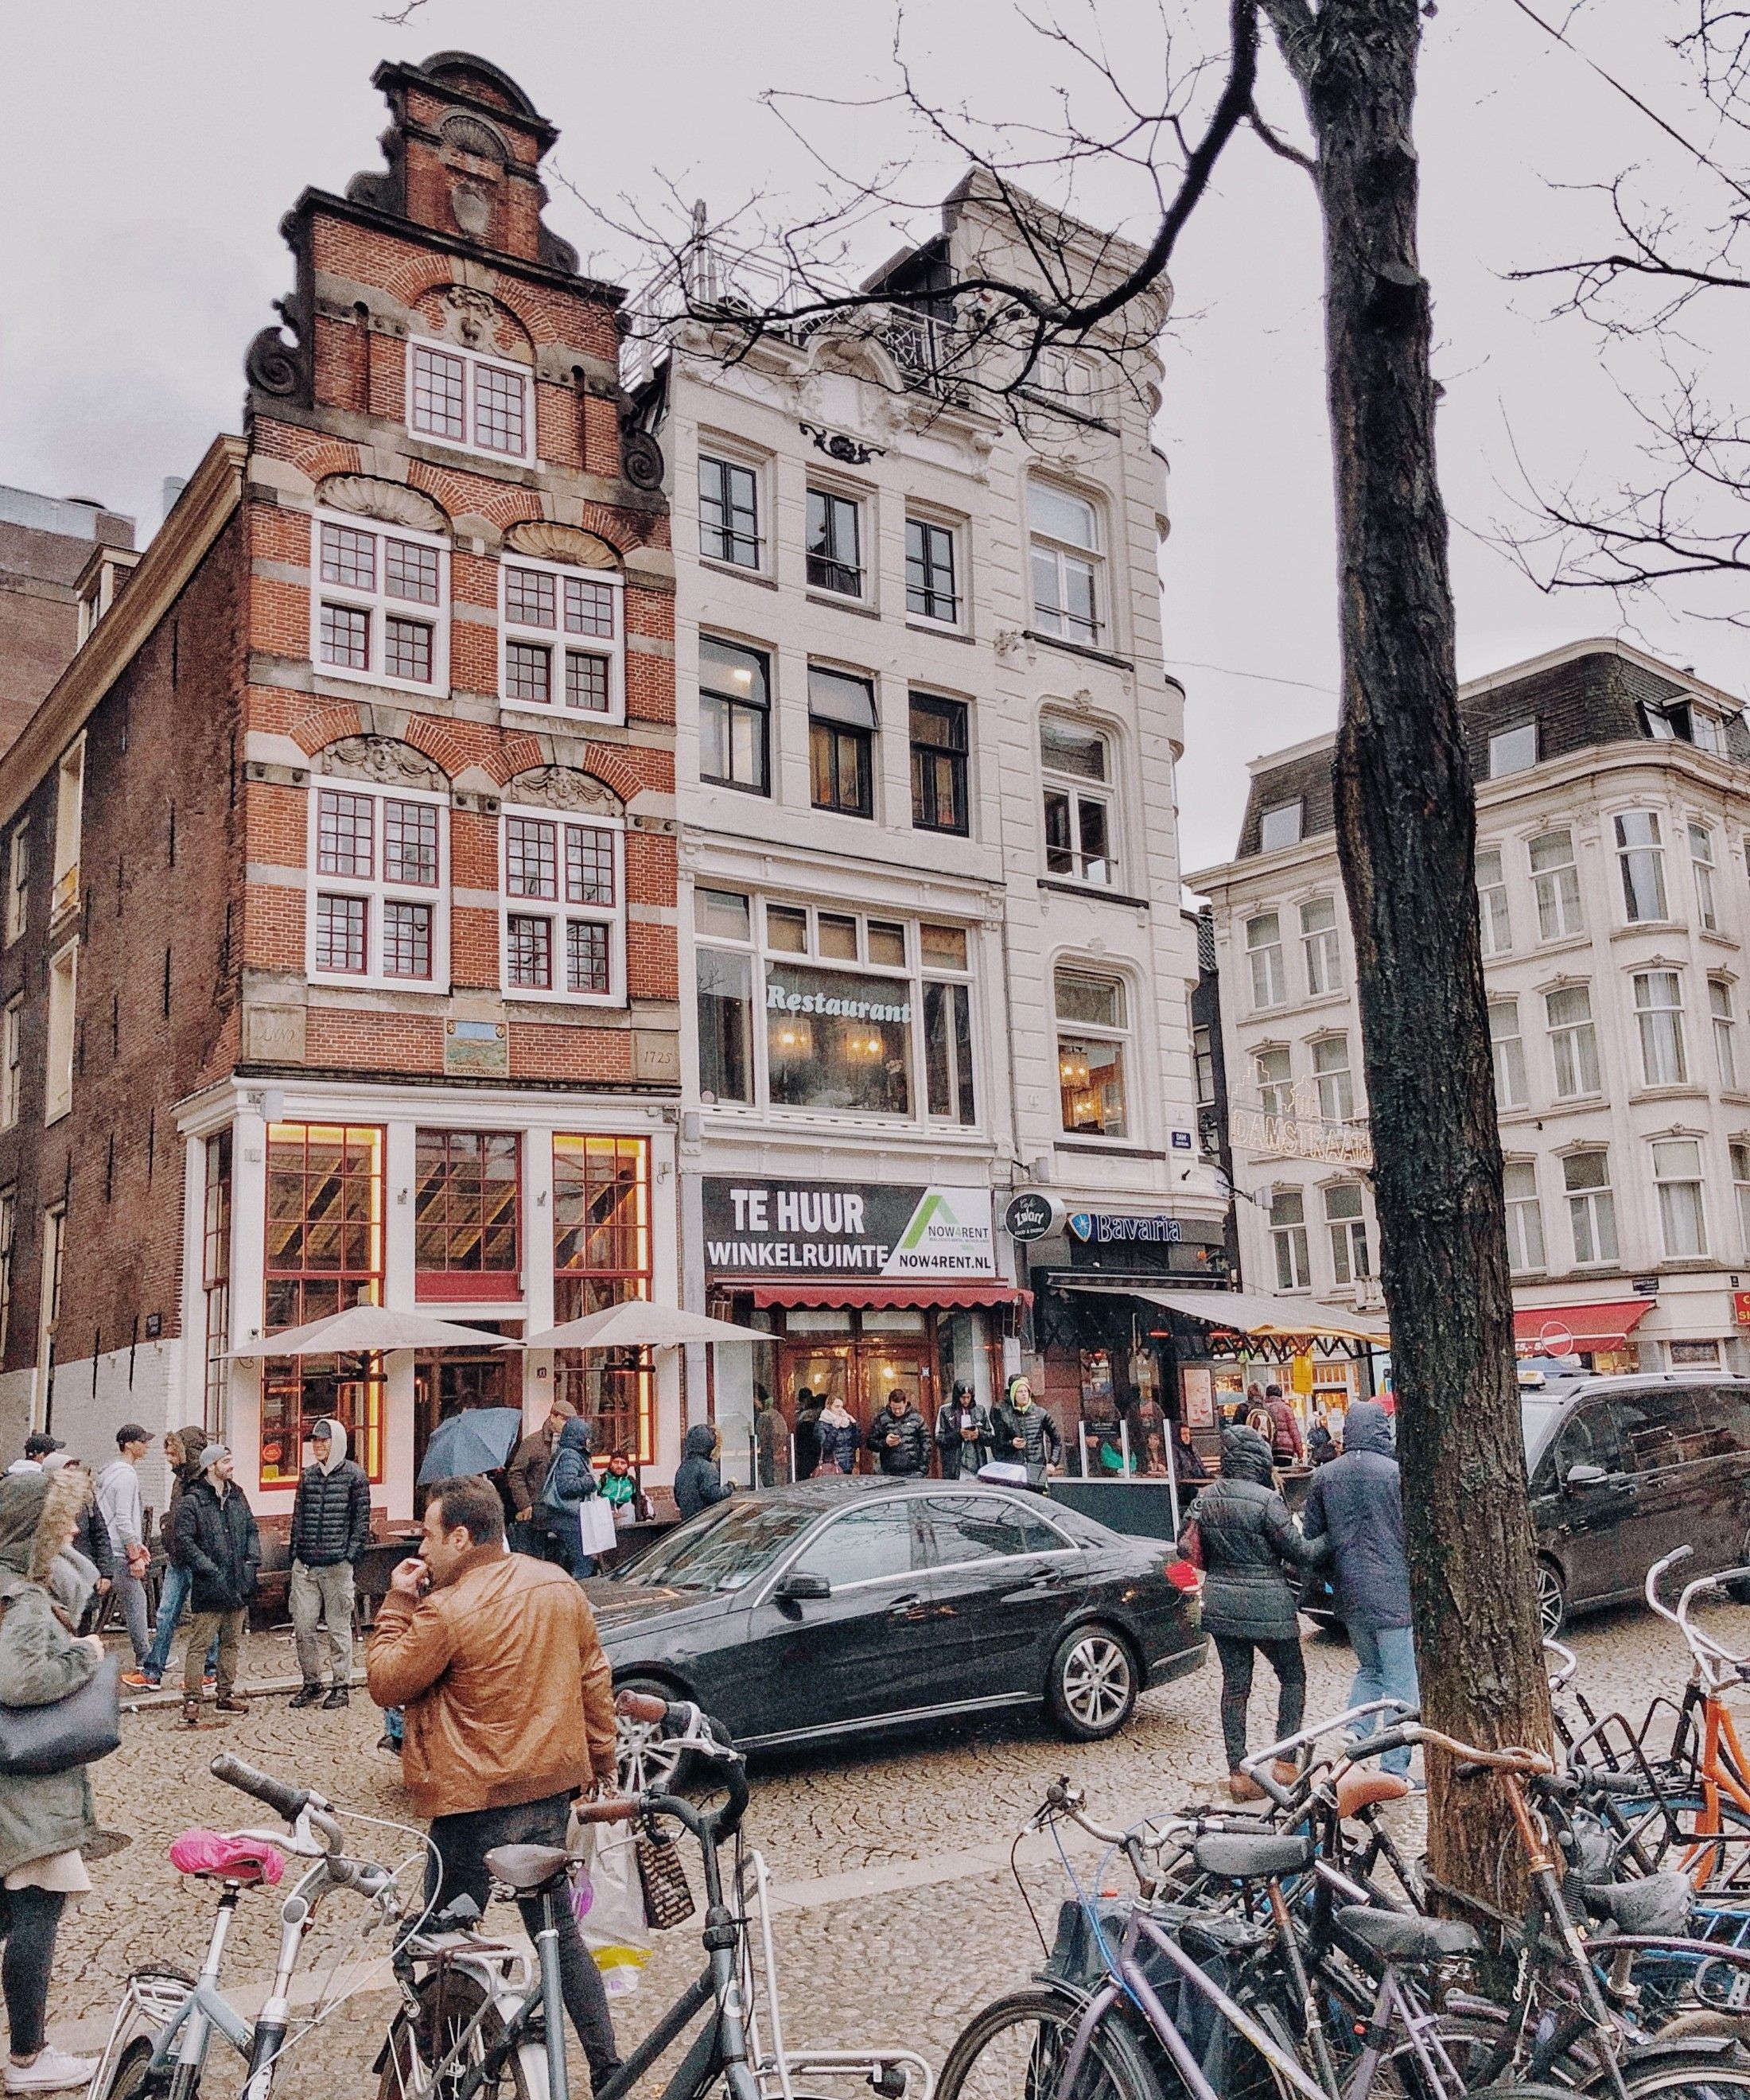 Caption: Warmoesstraat, Amsterdam, Netherlands.